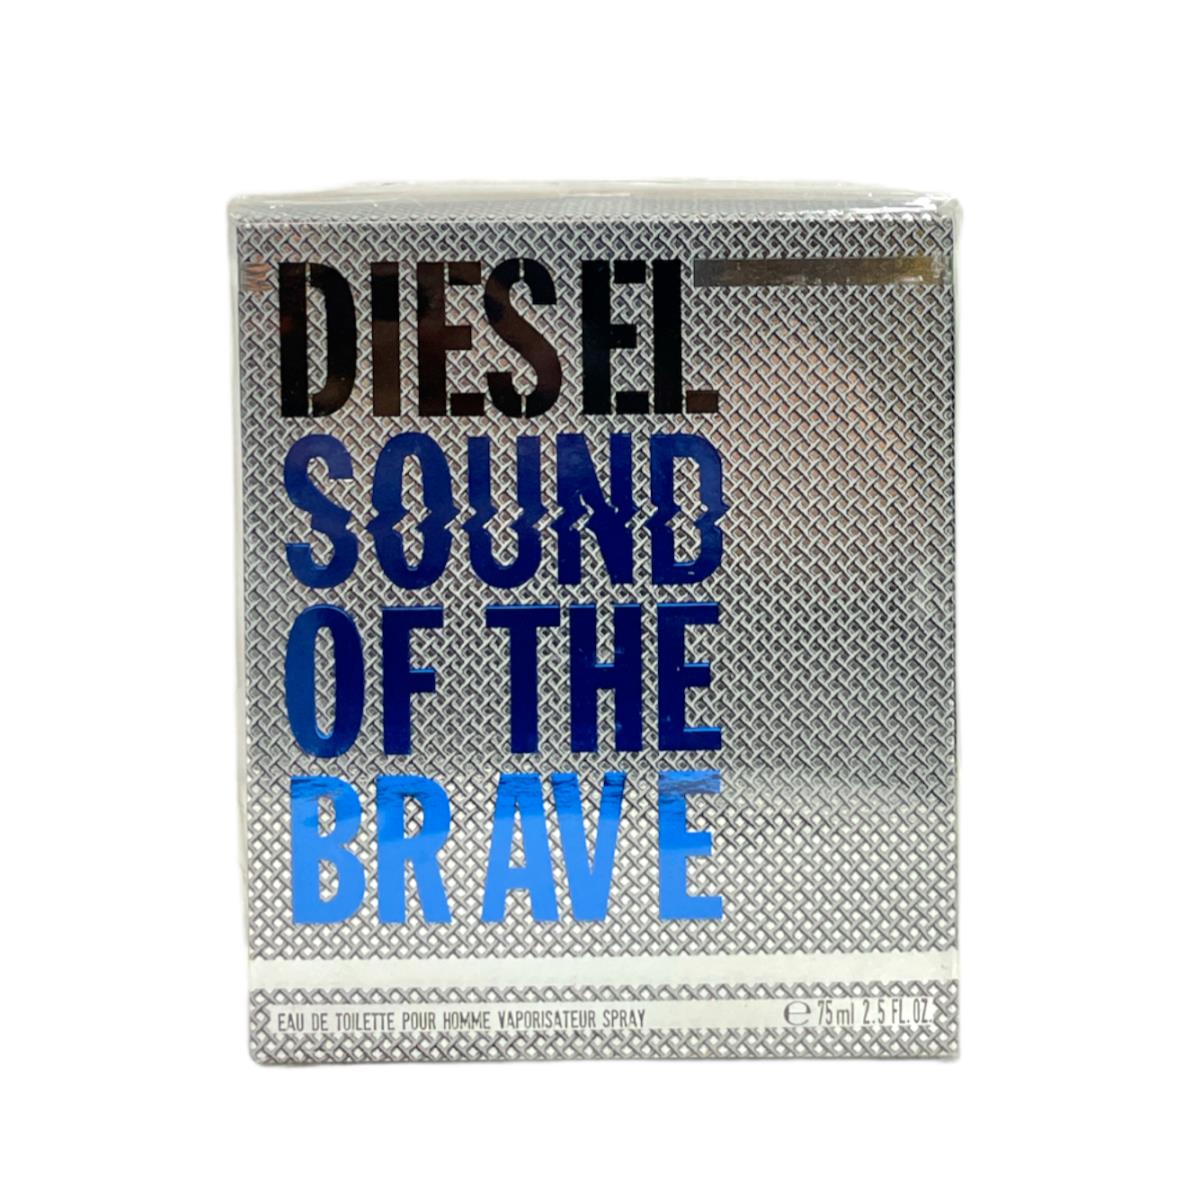 Diesel Sound Of The Brave Eau De Toilette 75ml/2.5fl As Seen In Pics